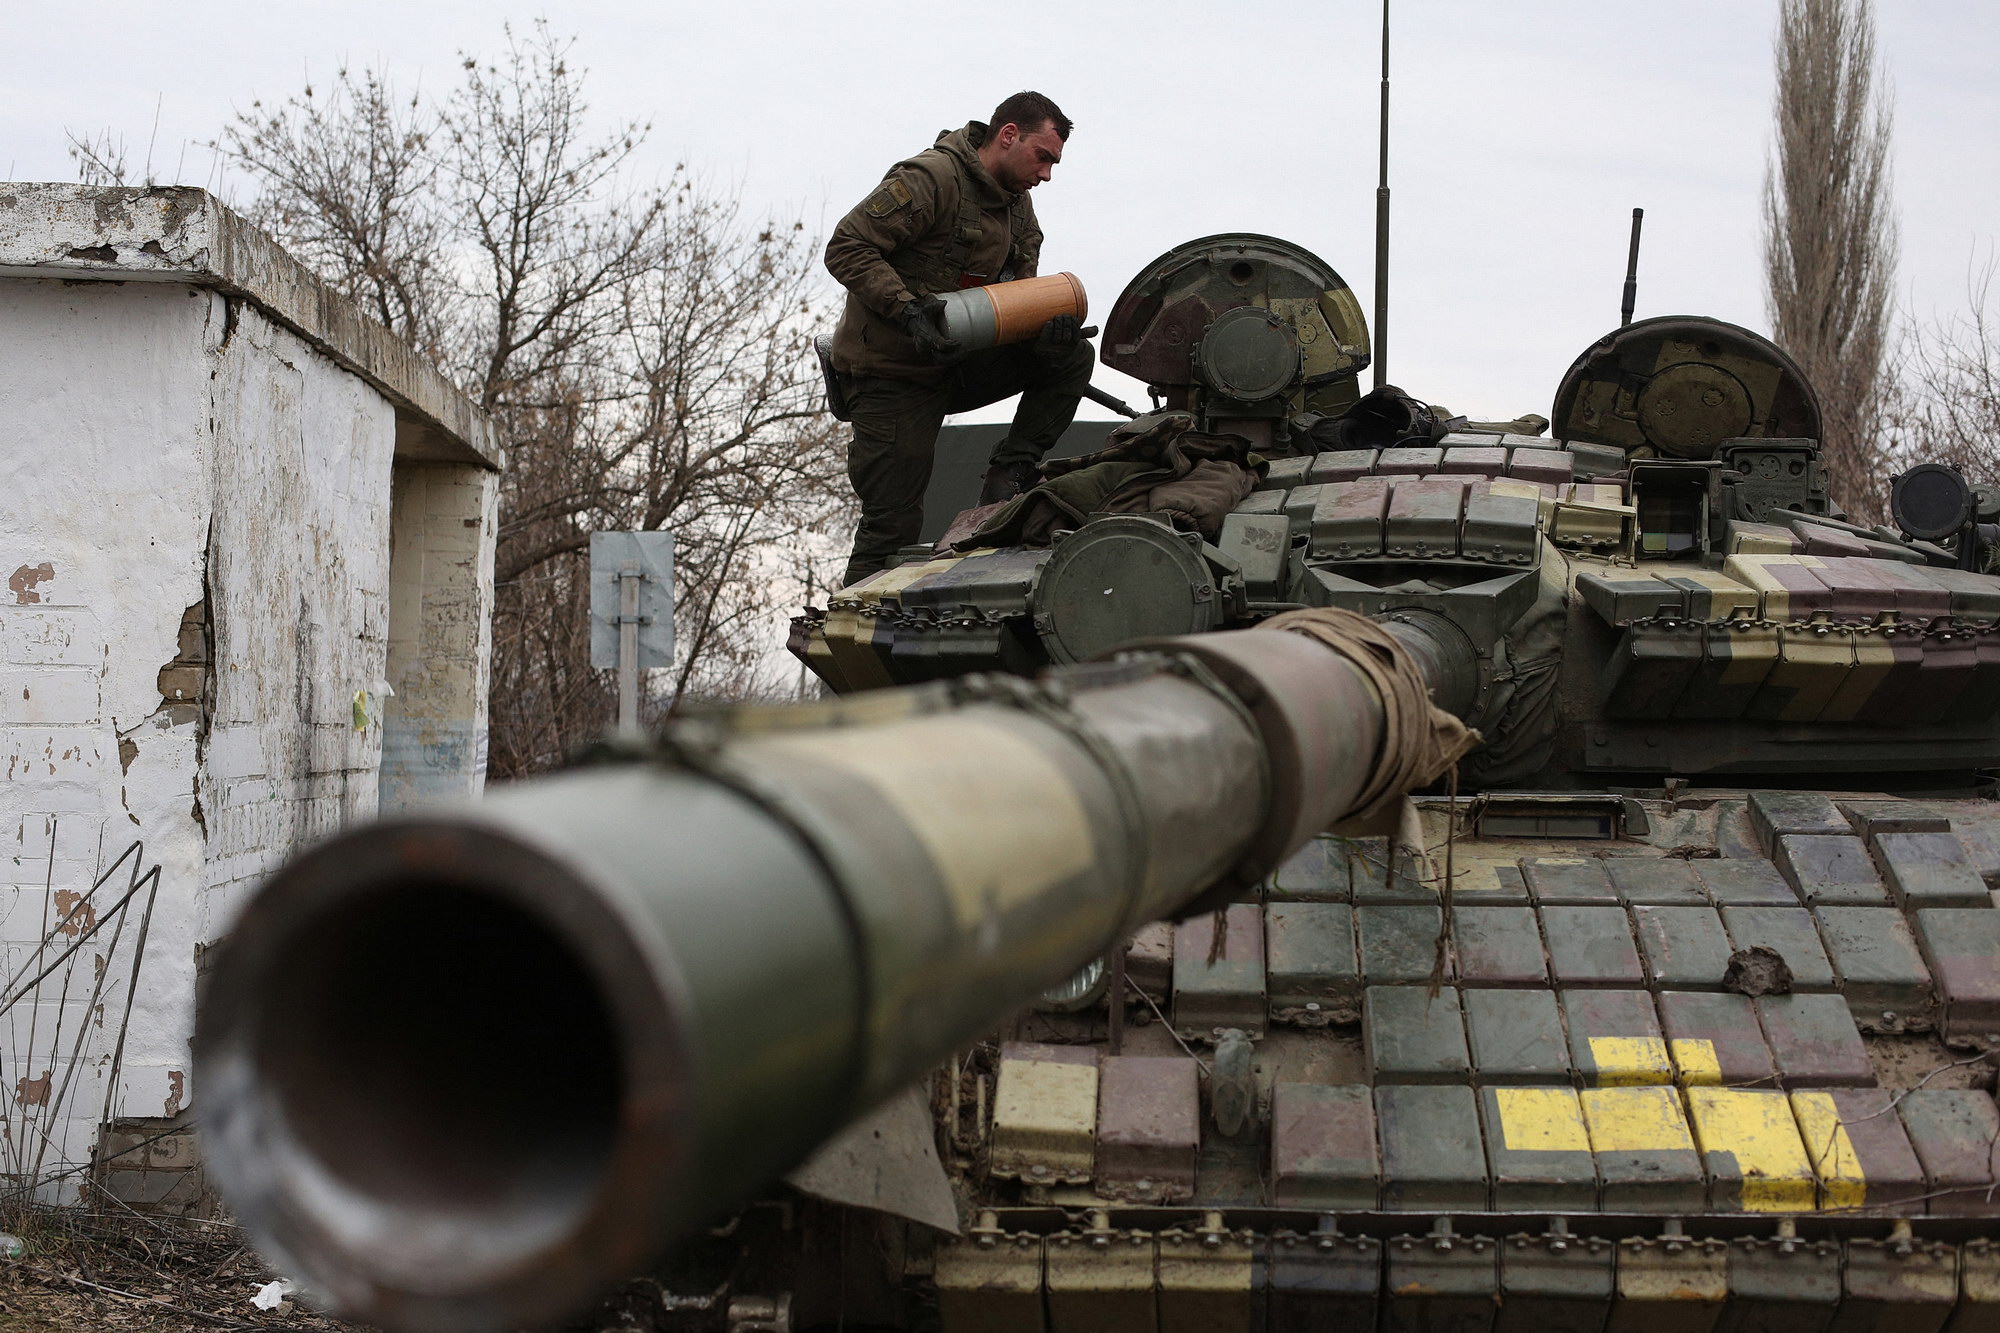 EXCLUSIVE: Voice message reveals Russian military unit's catastrophic losses in Ukraine